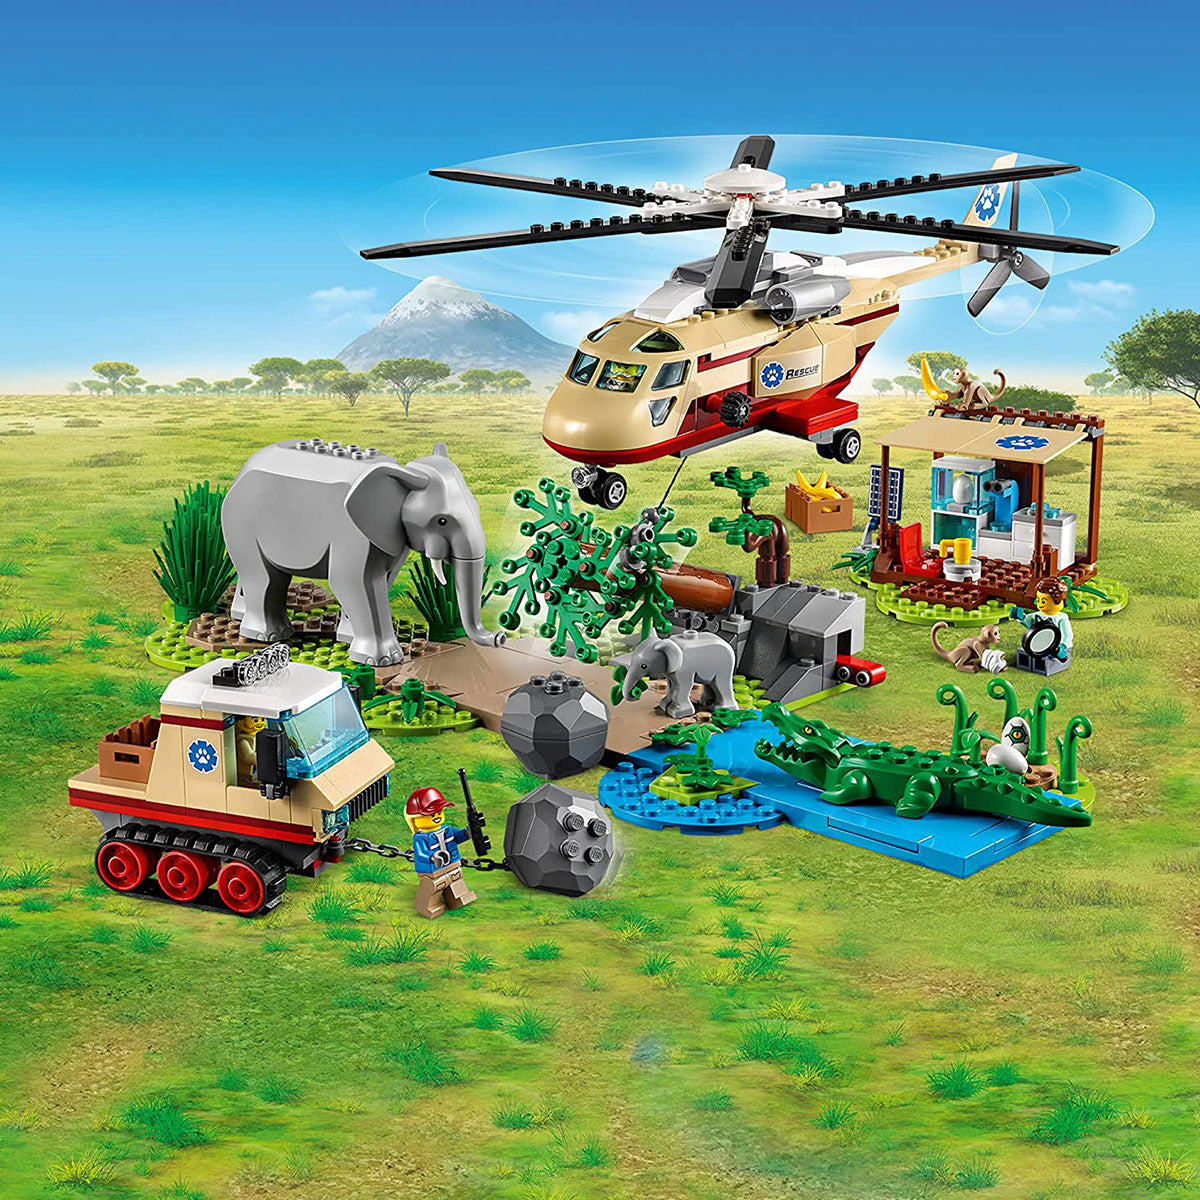 LEGO - City Wildlife Rescue Operation 60302